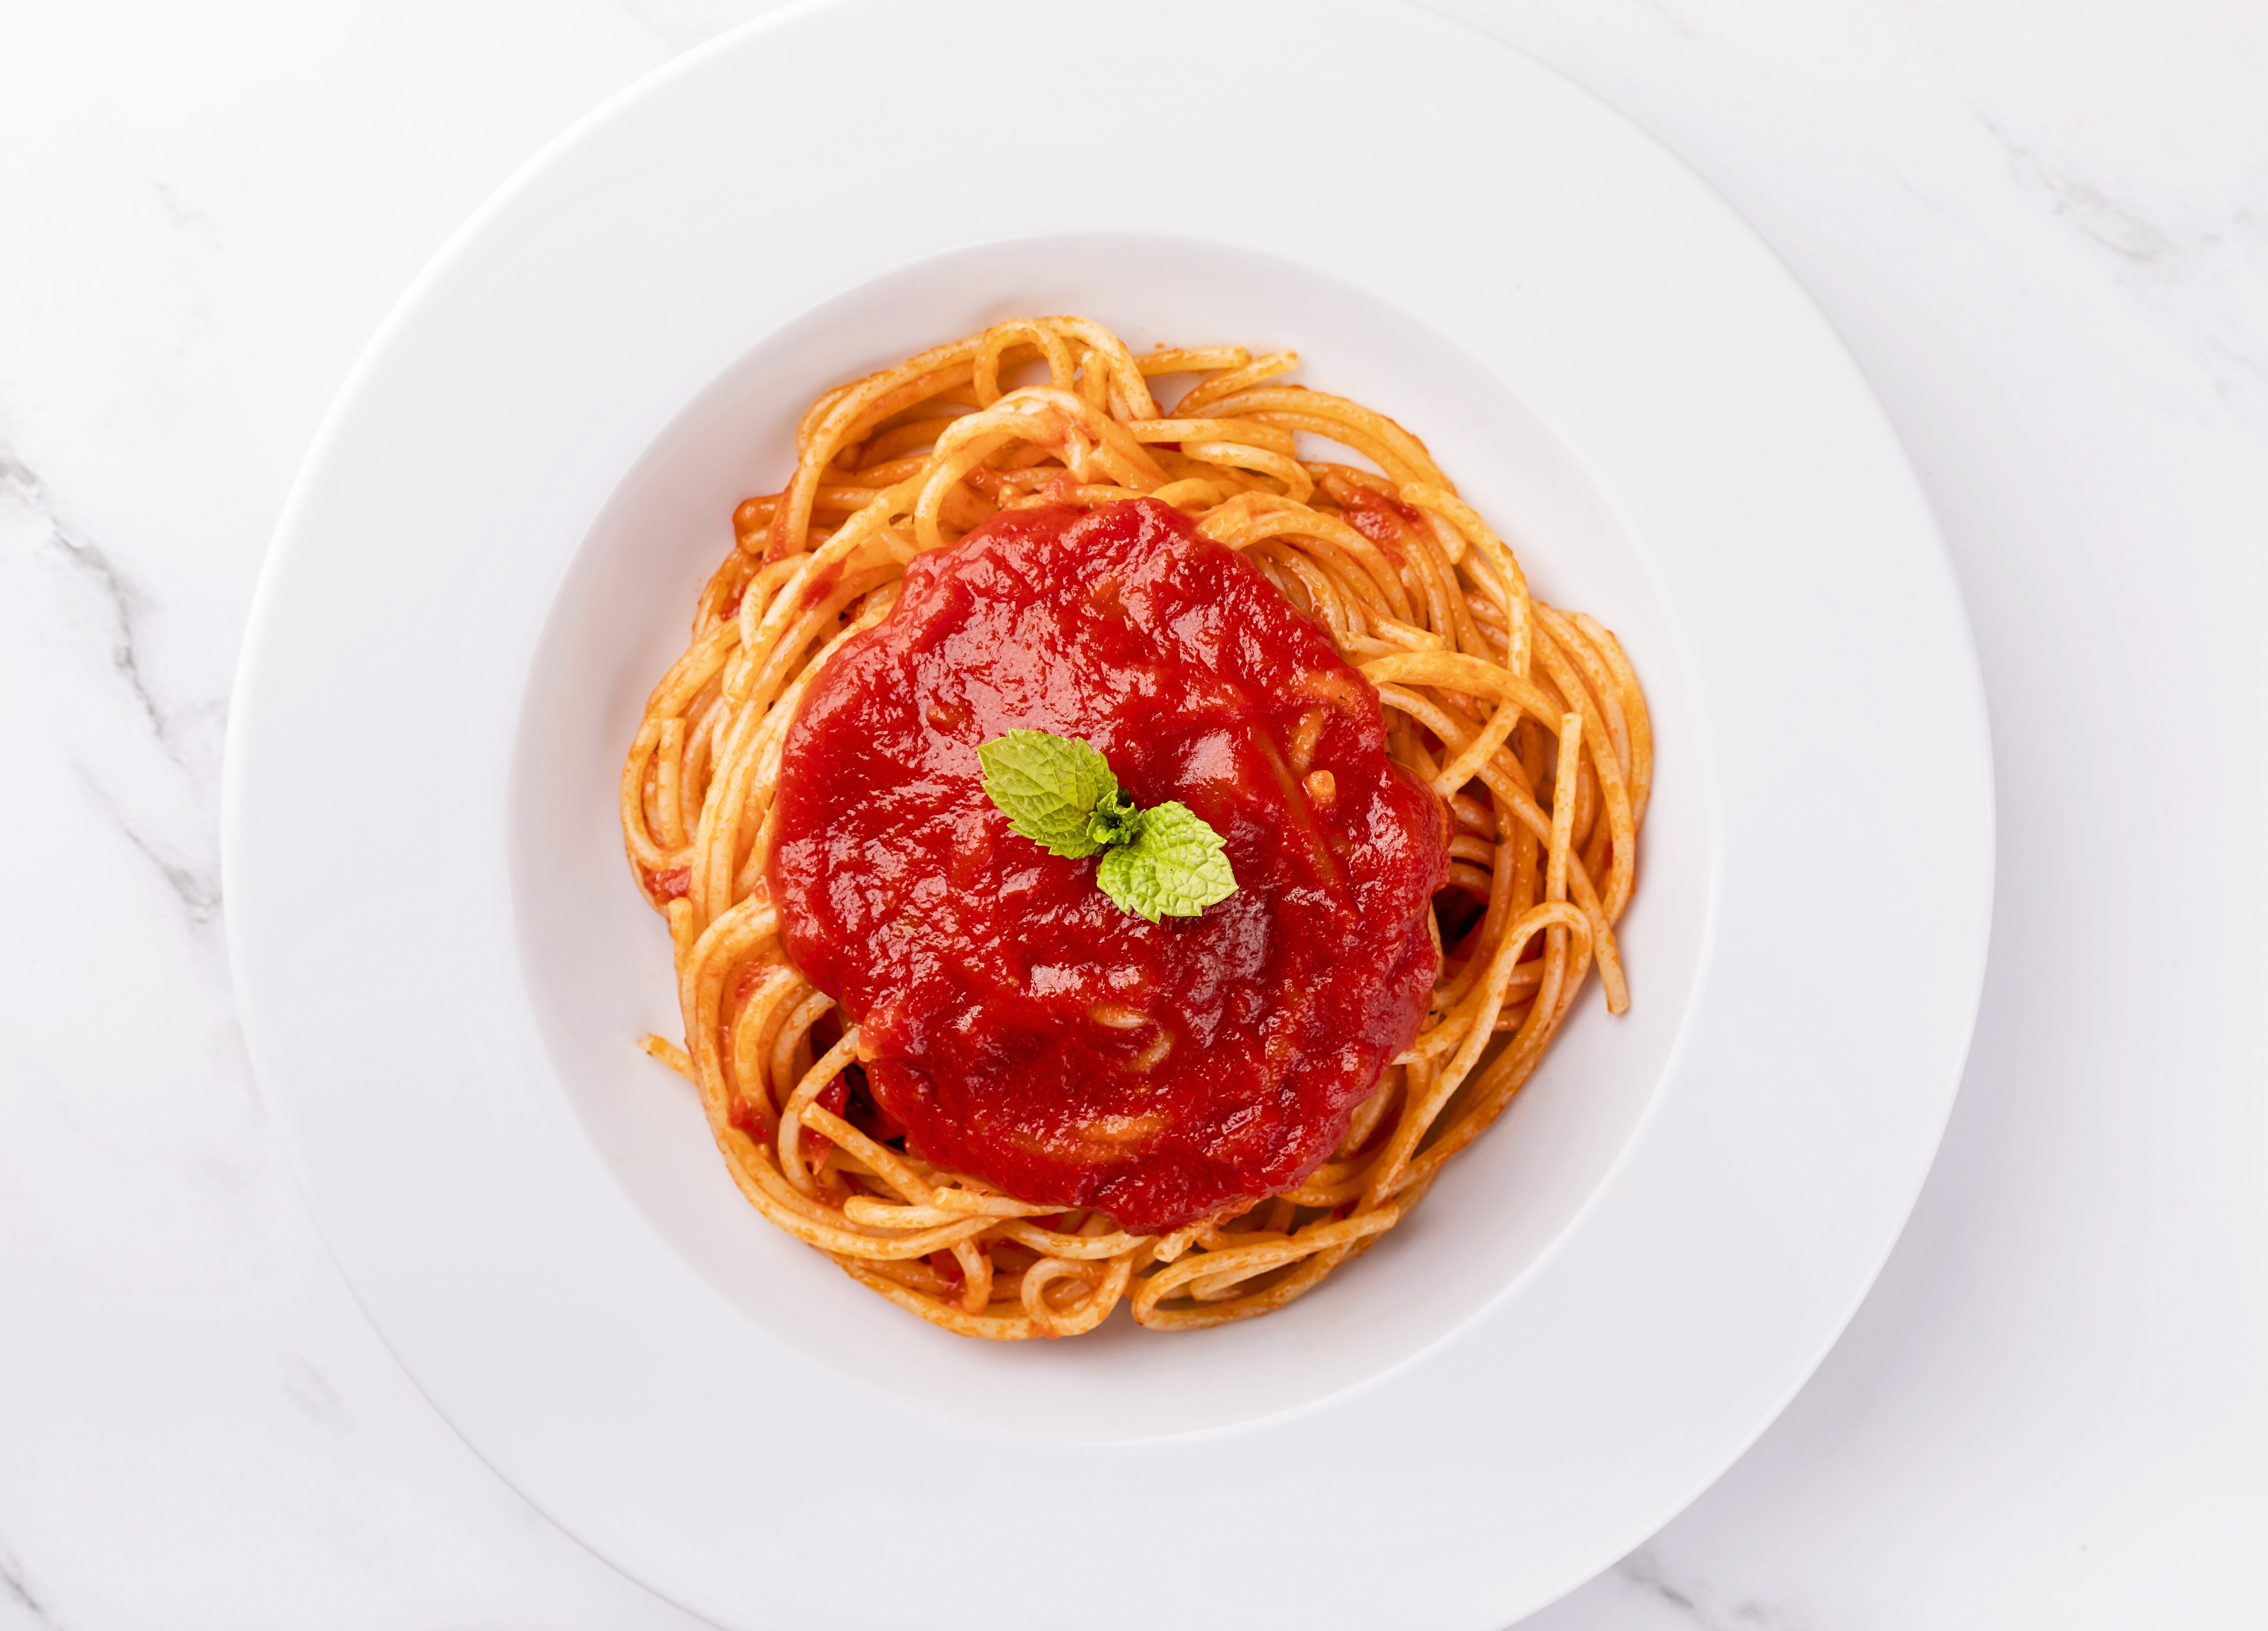 A bowl of spaghetti garnished with basil